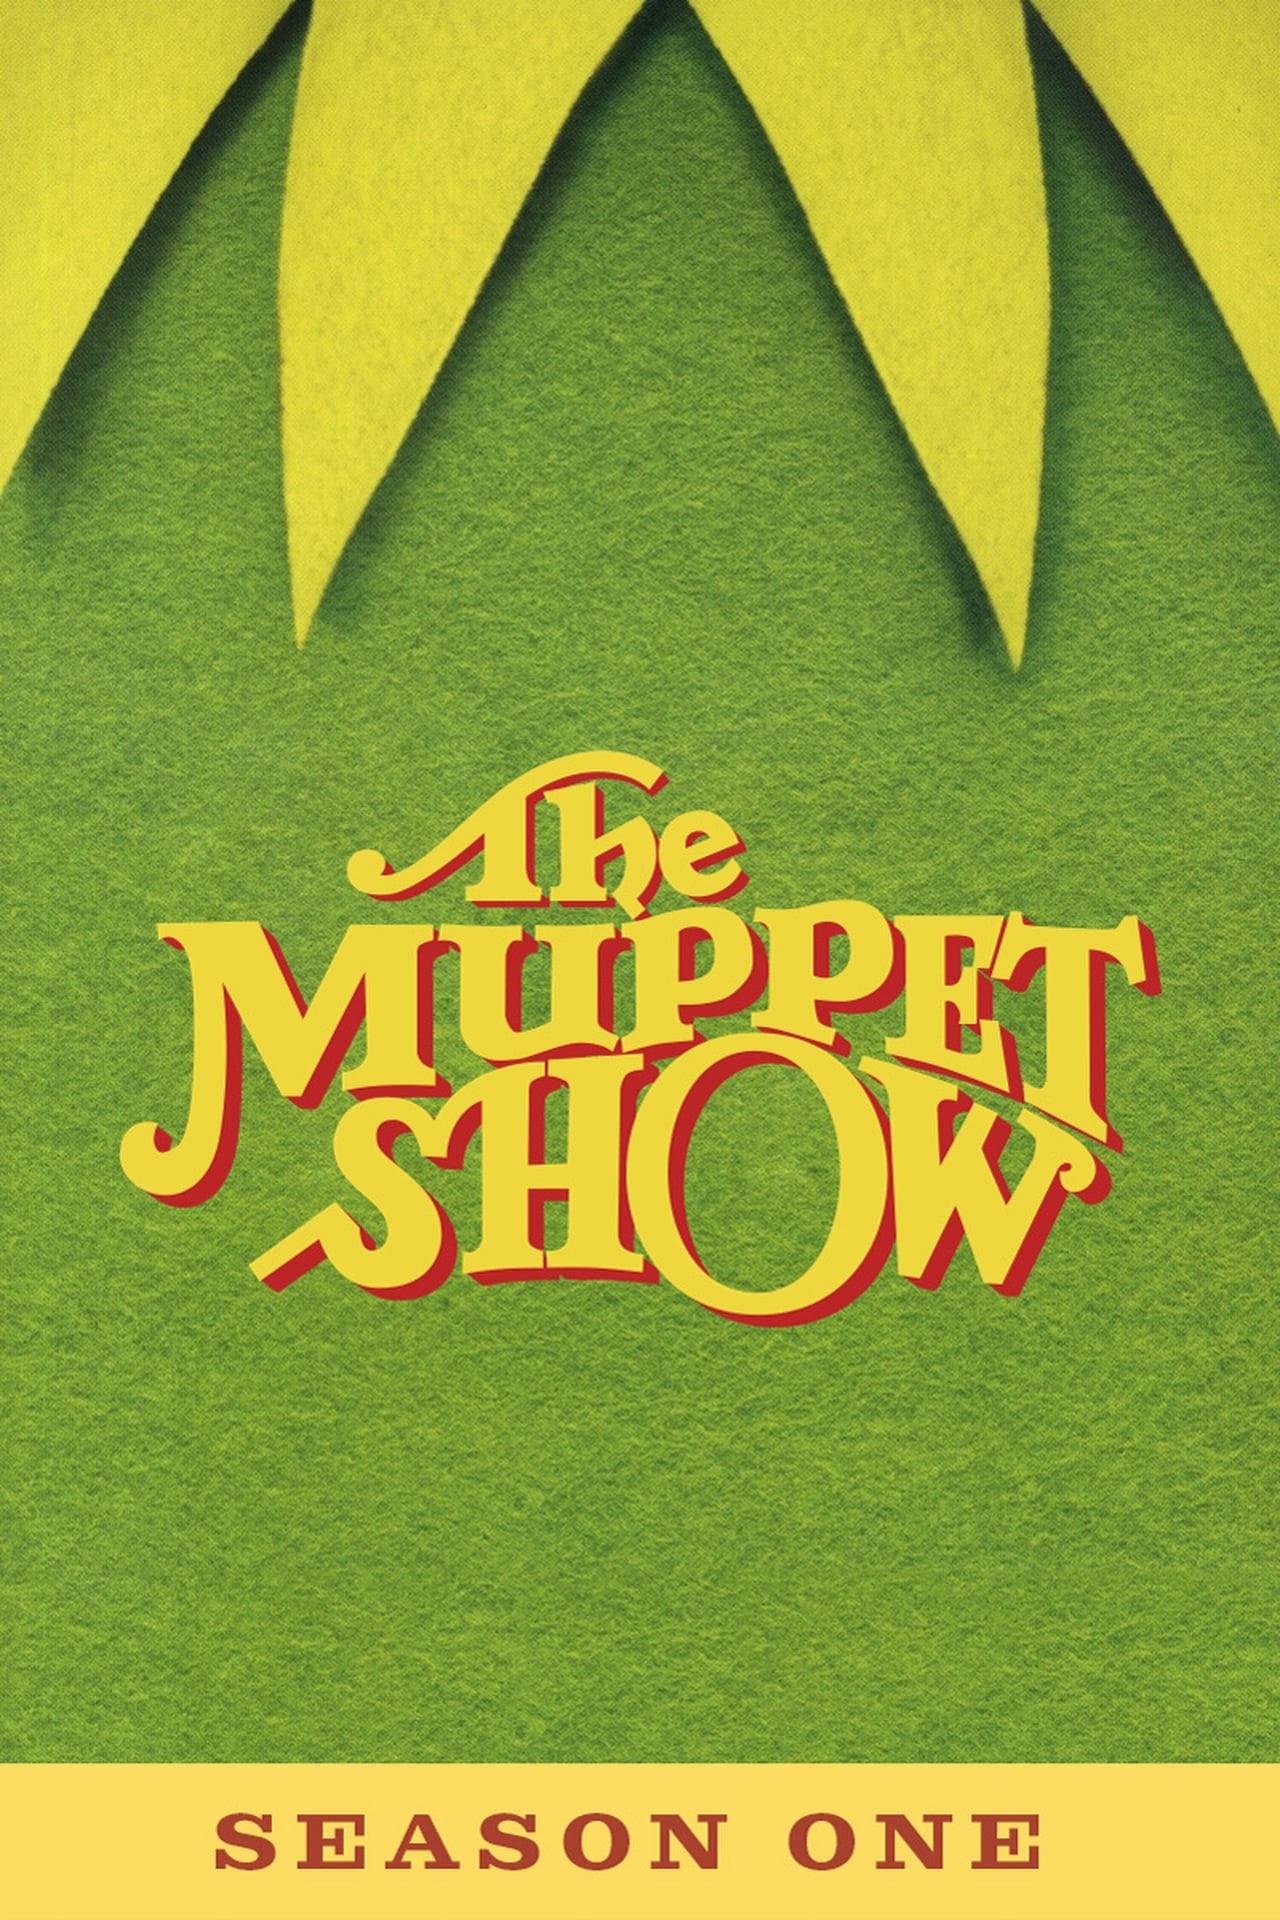 The Muppet Show Season 1